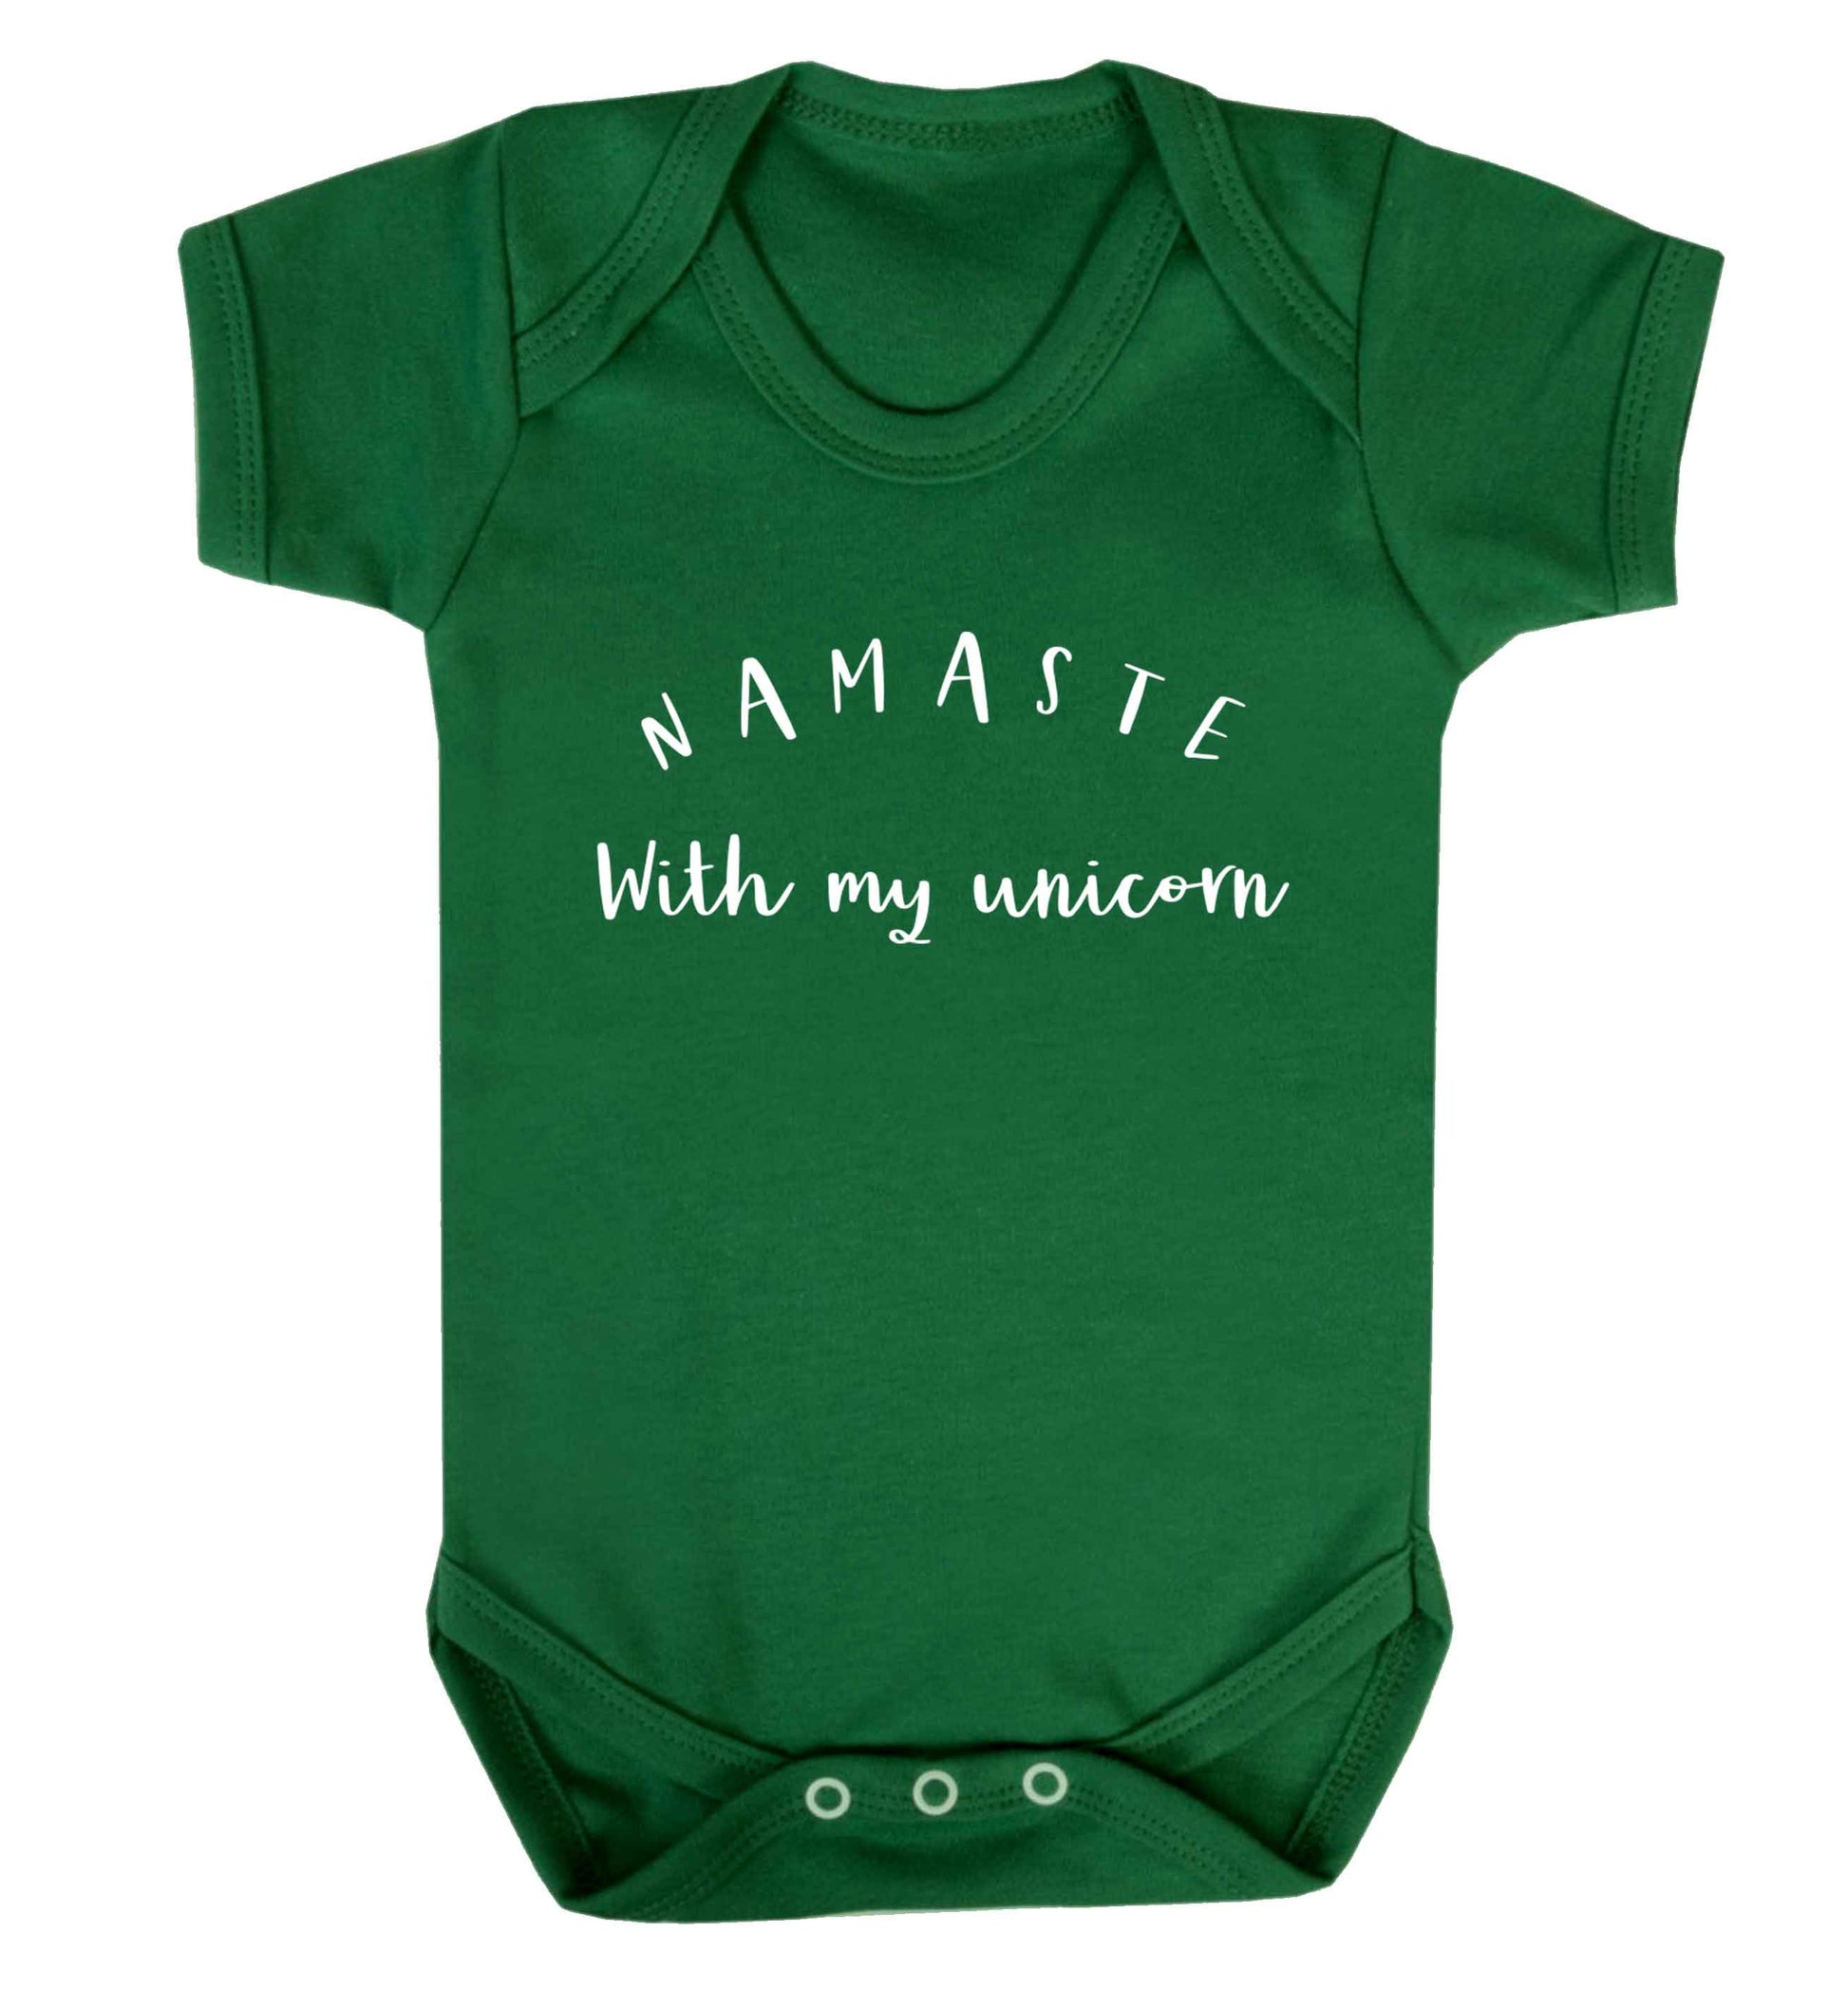 Namaste with my unicorn Baby Vest green 18-24 months